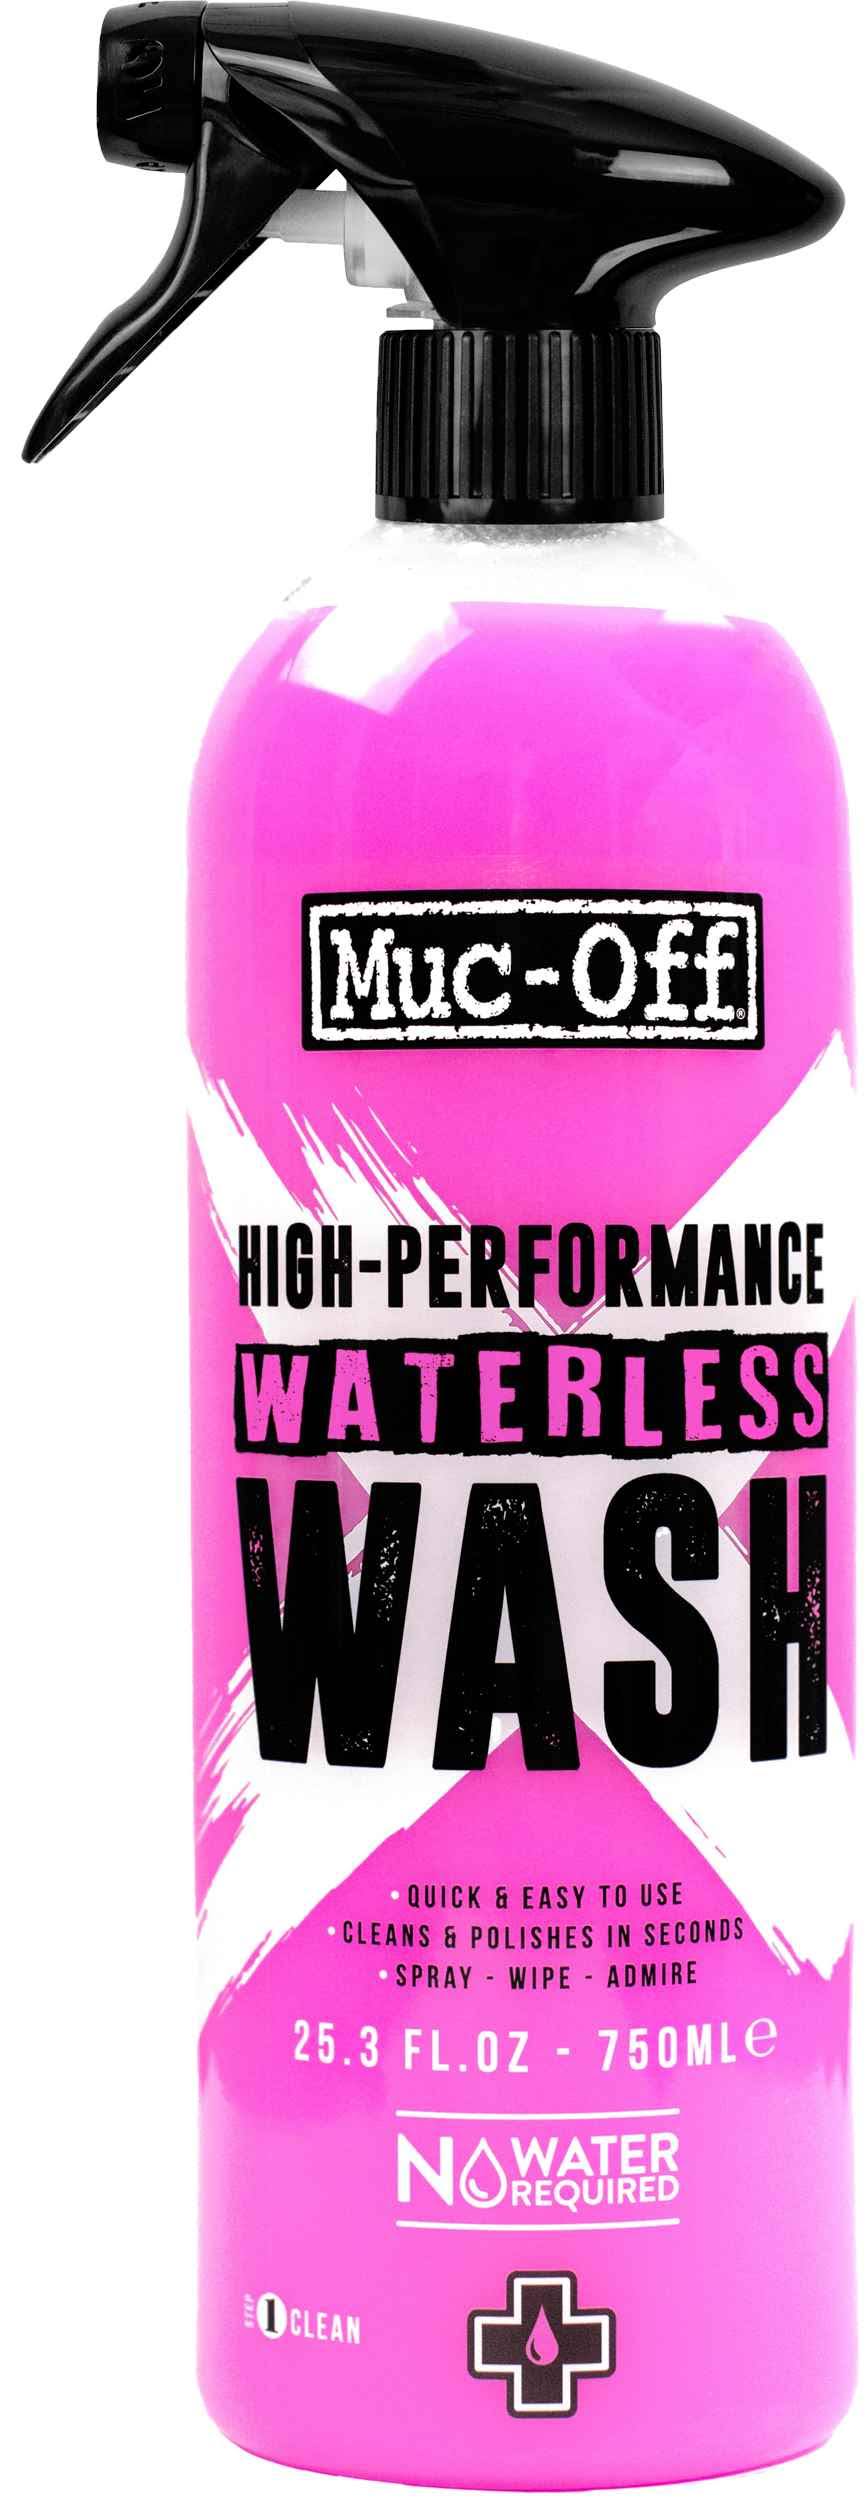 Muc-Off Waterless Wash Bike Dry Cleaner - 750ml